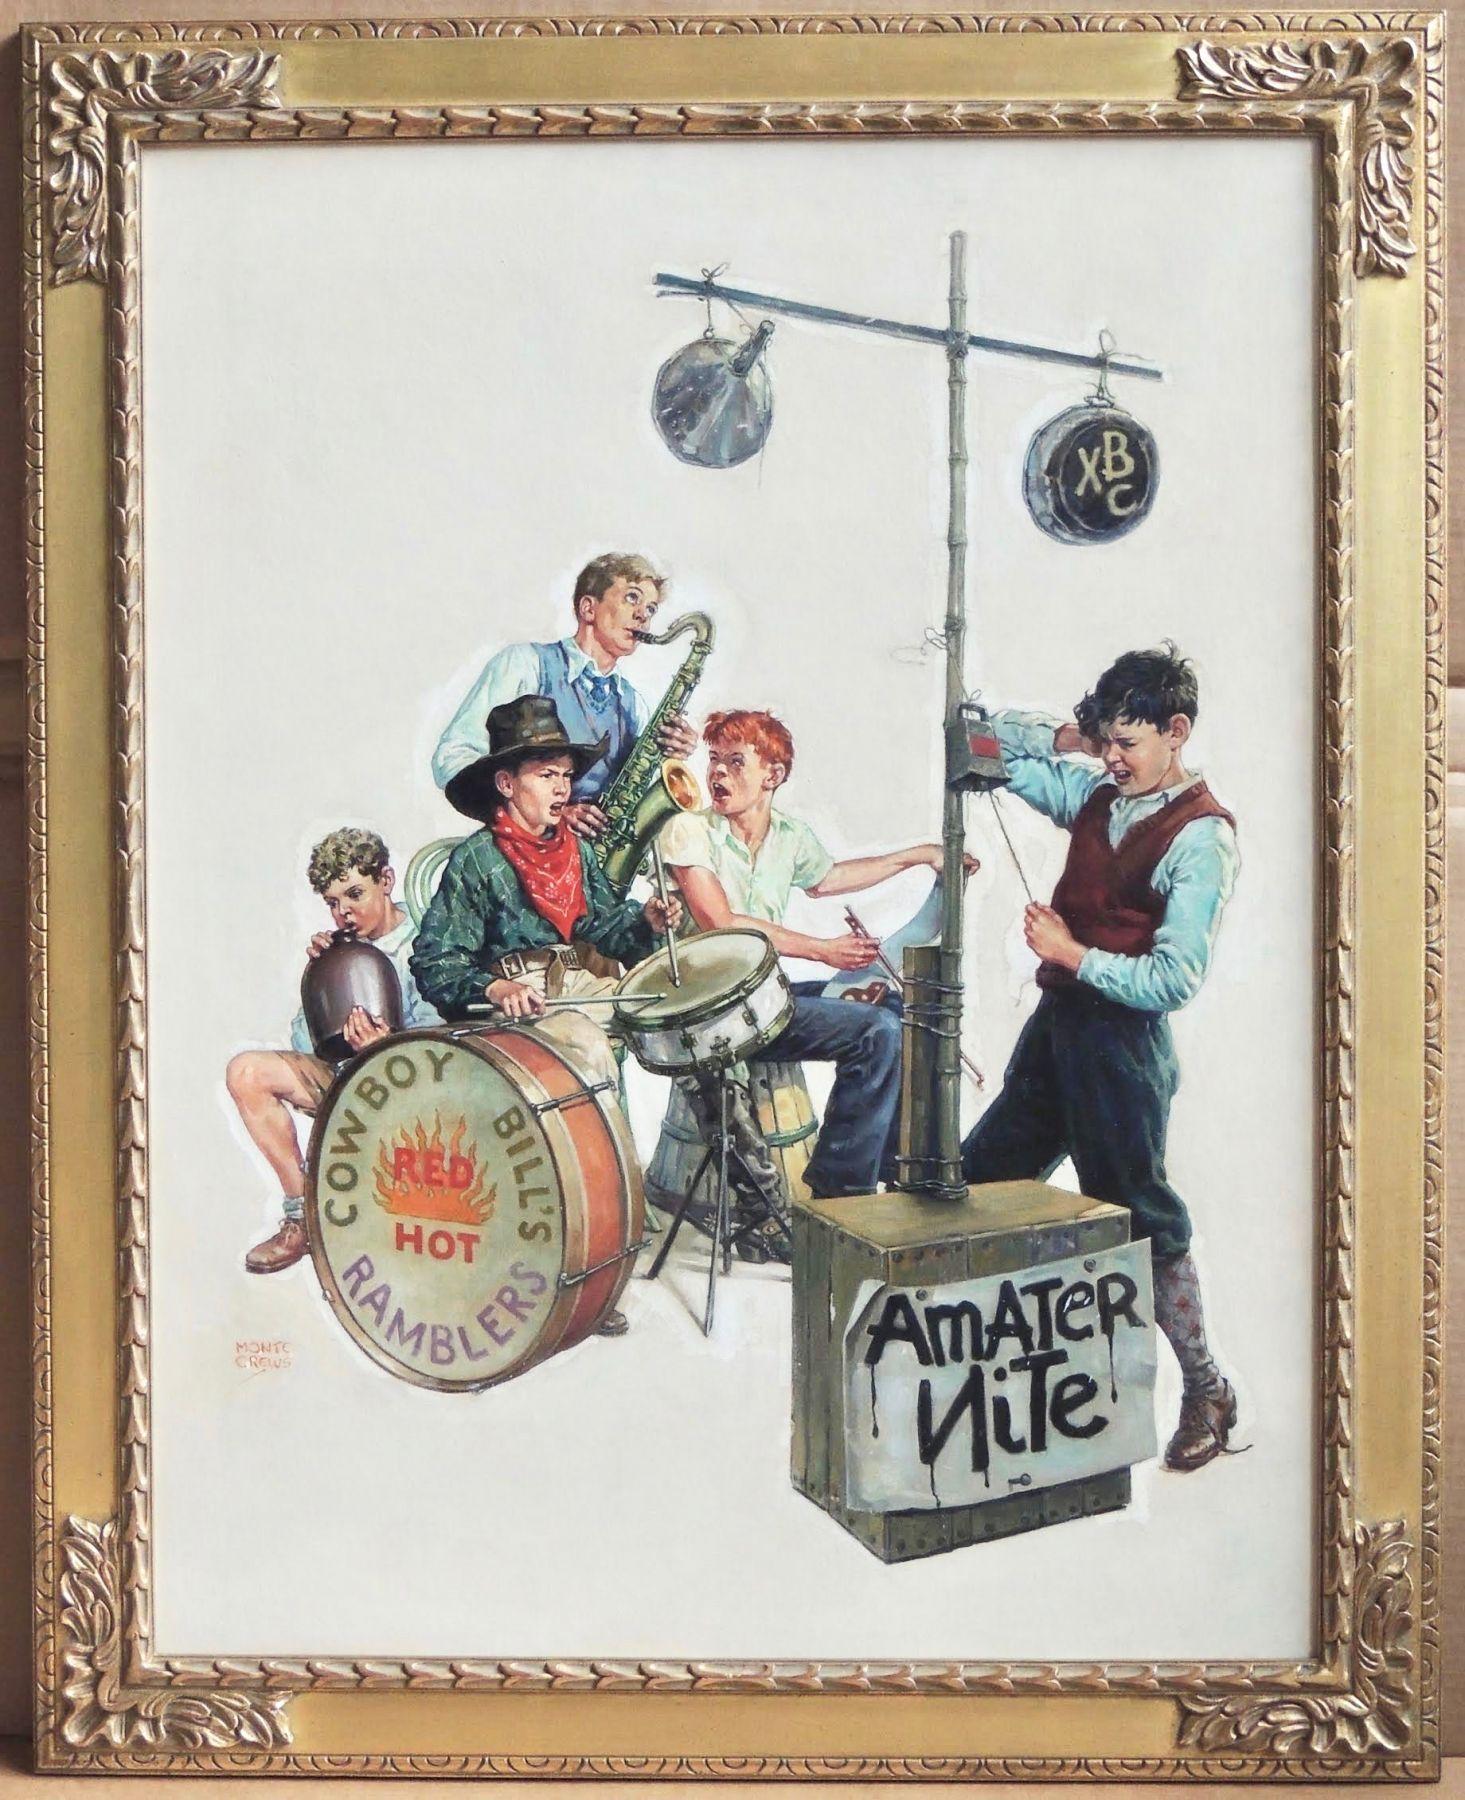 Amateur Nite - Cowboy Bill's Ramblers, The Saturday Evening Post-Cover, Jan – Painting von Monte Crews